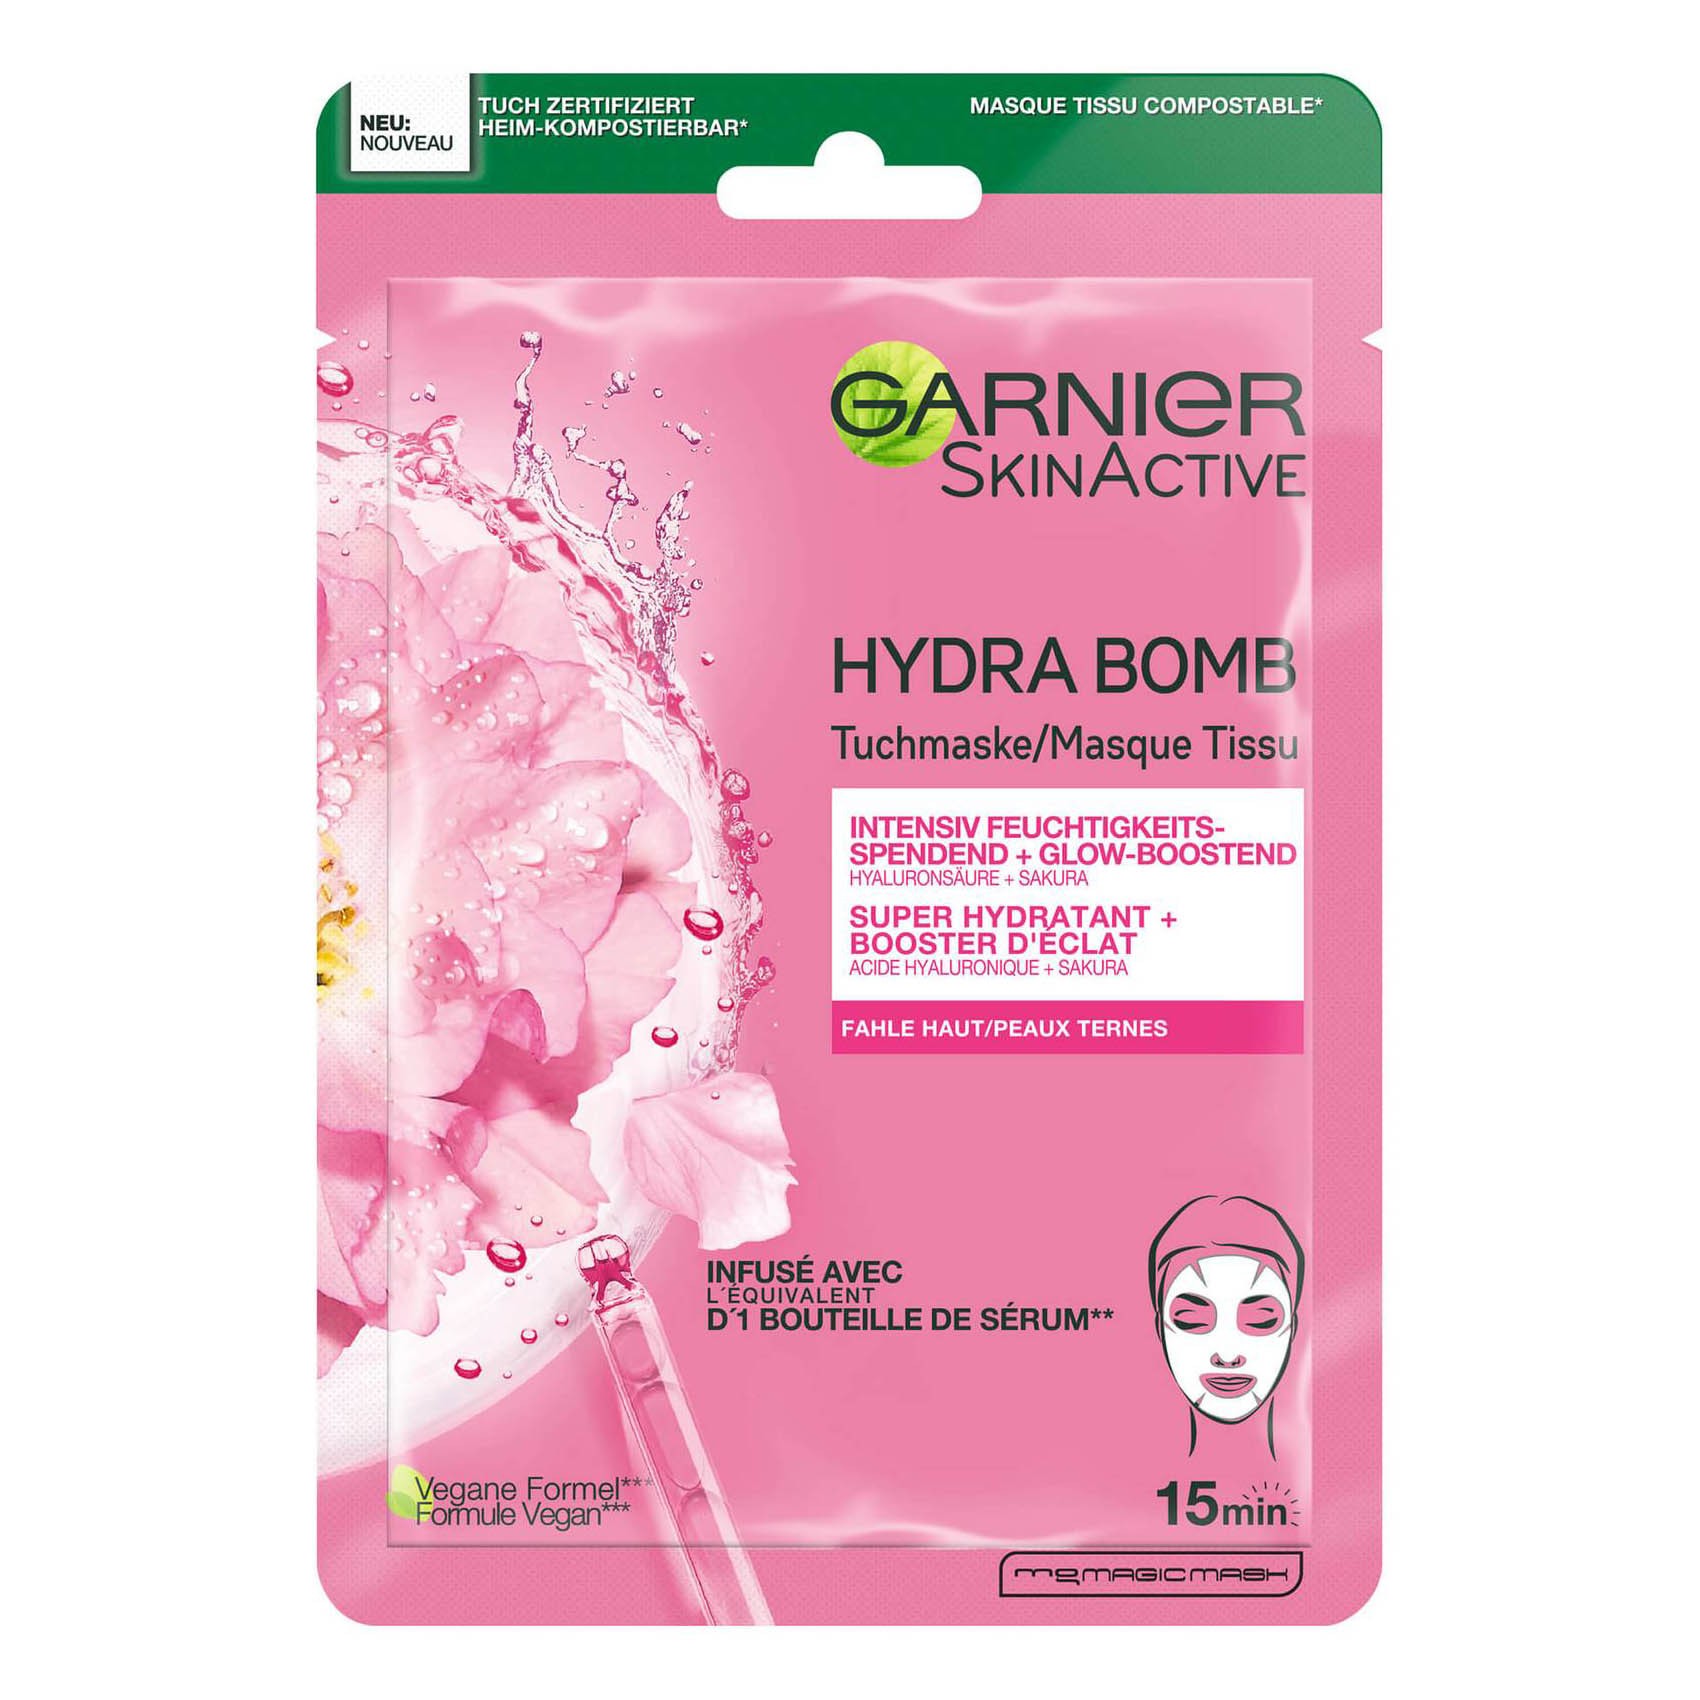 SkinActive Hydra Bomb Tuchmaske - Feuchtigkeitsspendend & Glow-Boosting